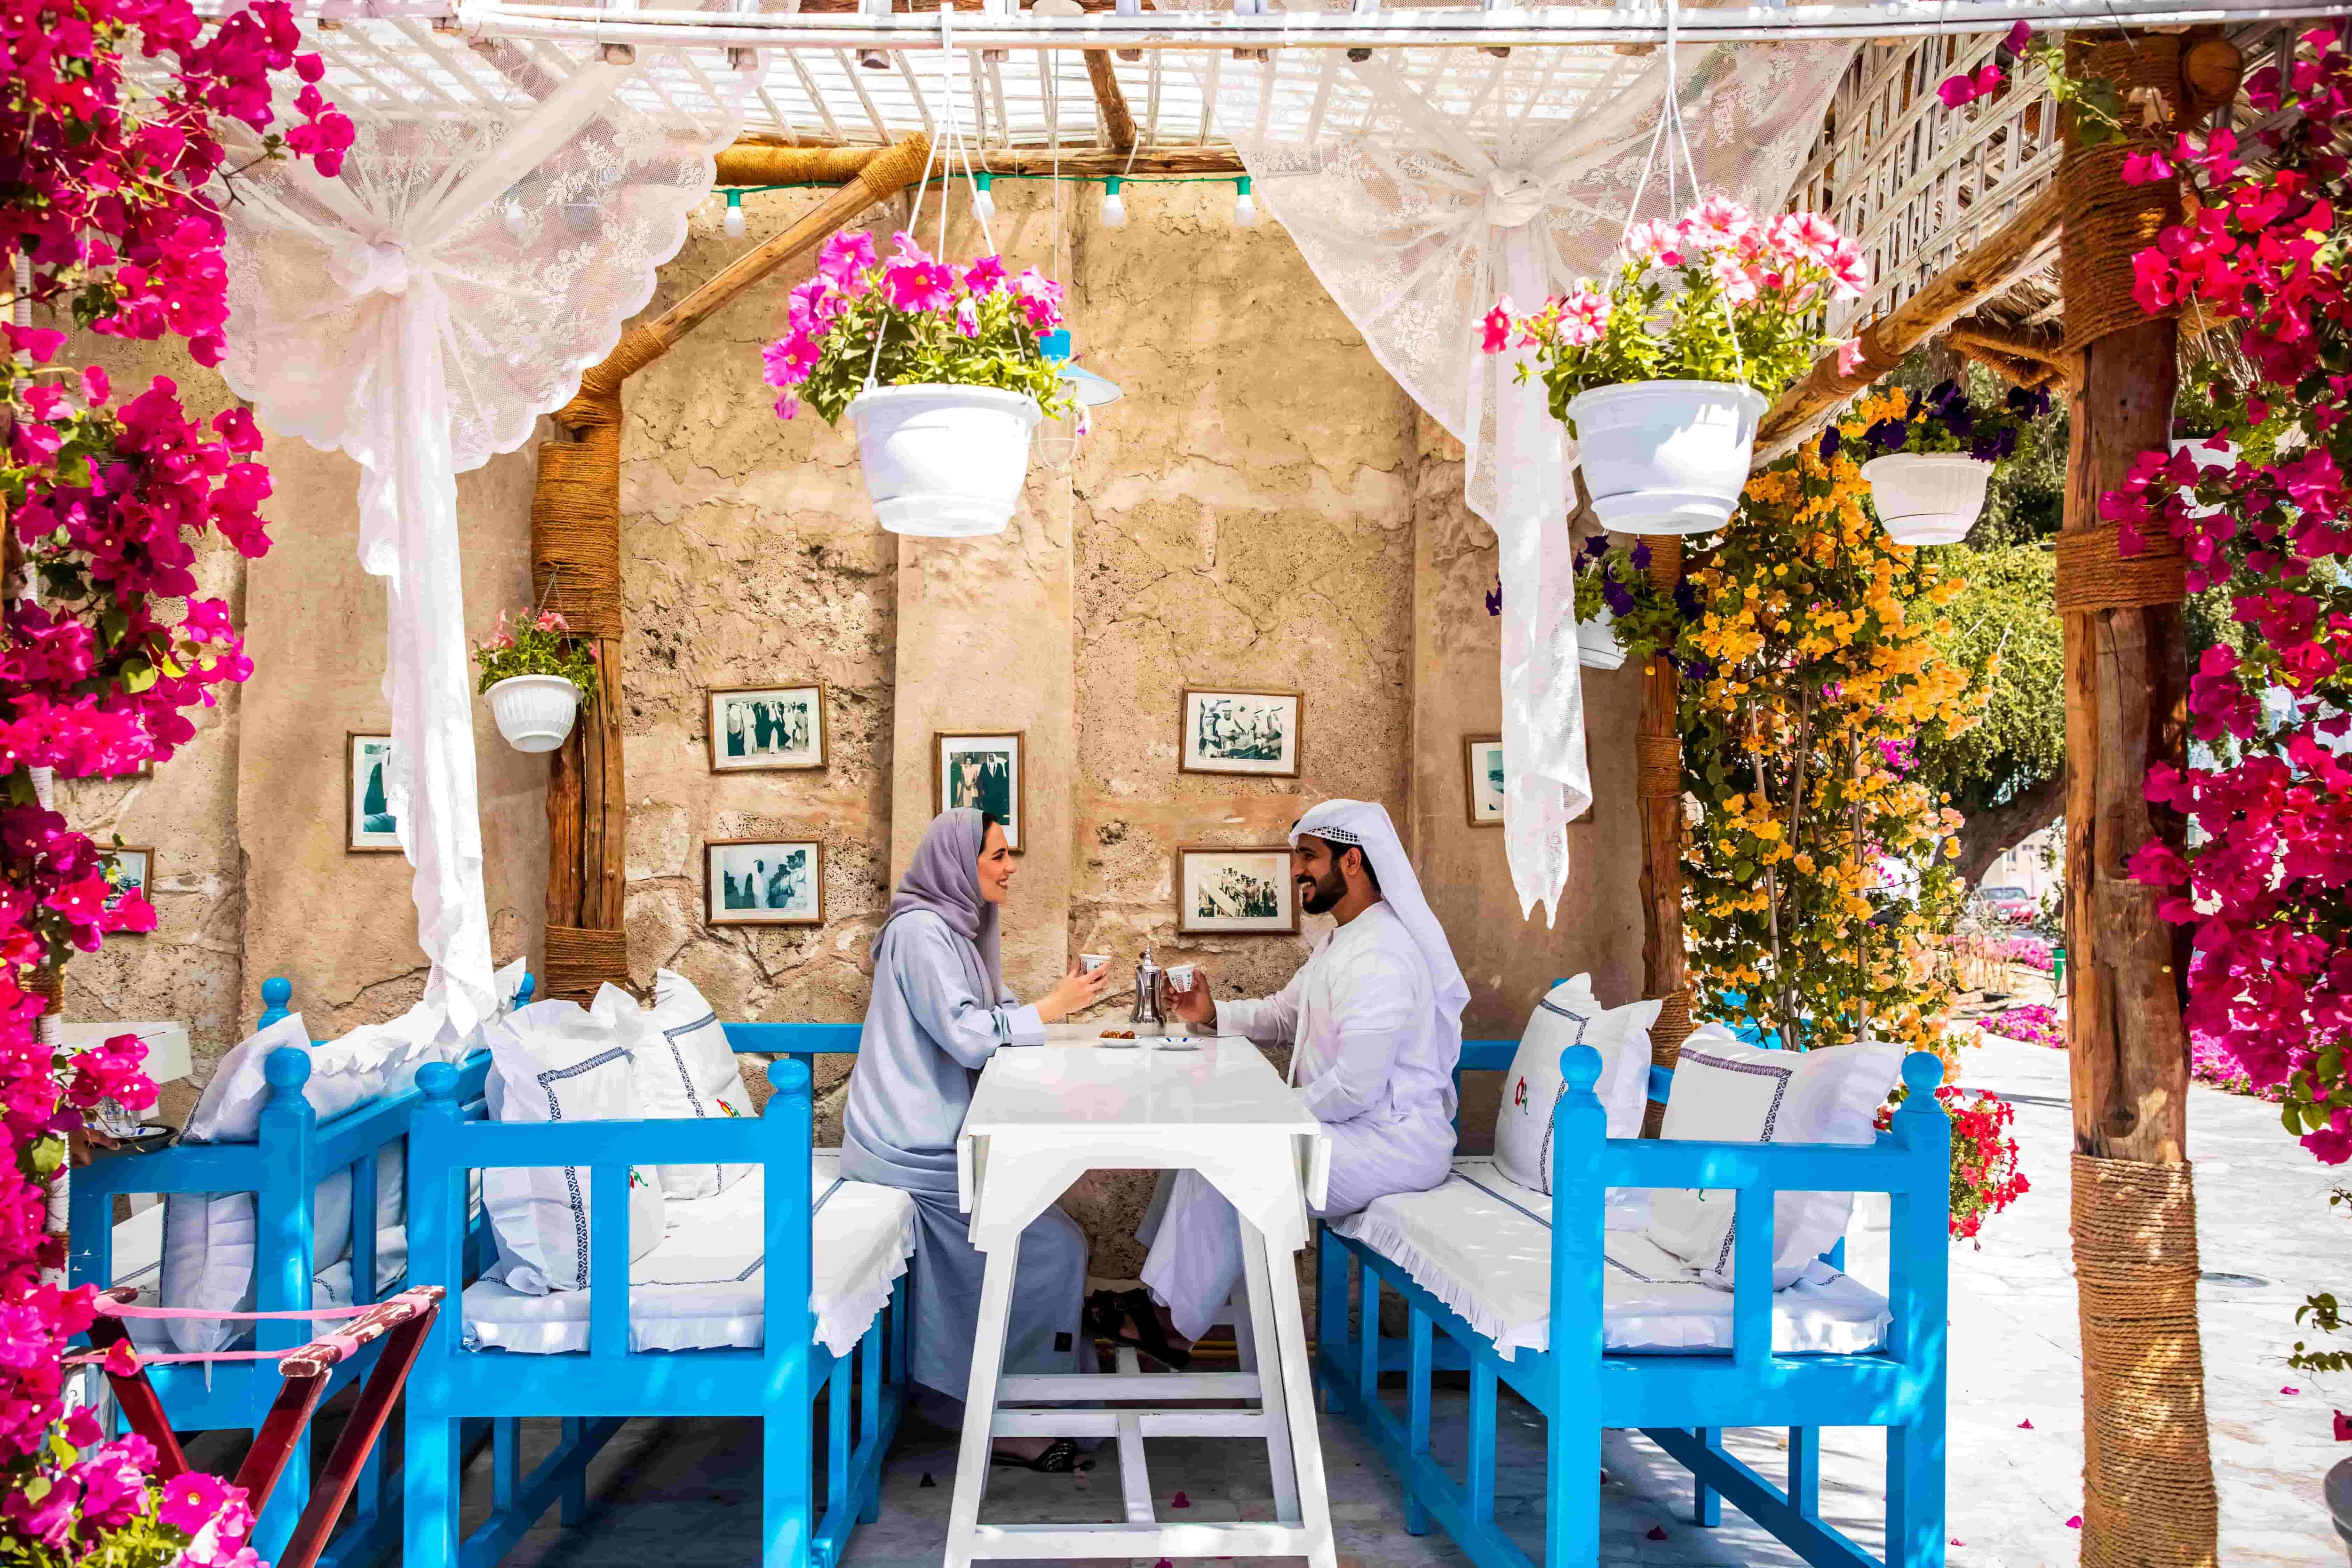 Gemme culinarie: i 20 migliori ristoranti di Dubai e i loro vivaci dintorni  - Paragon Properties